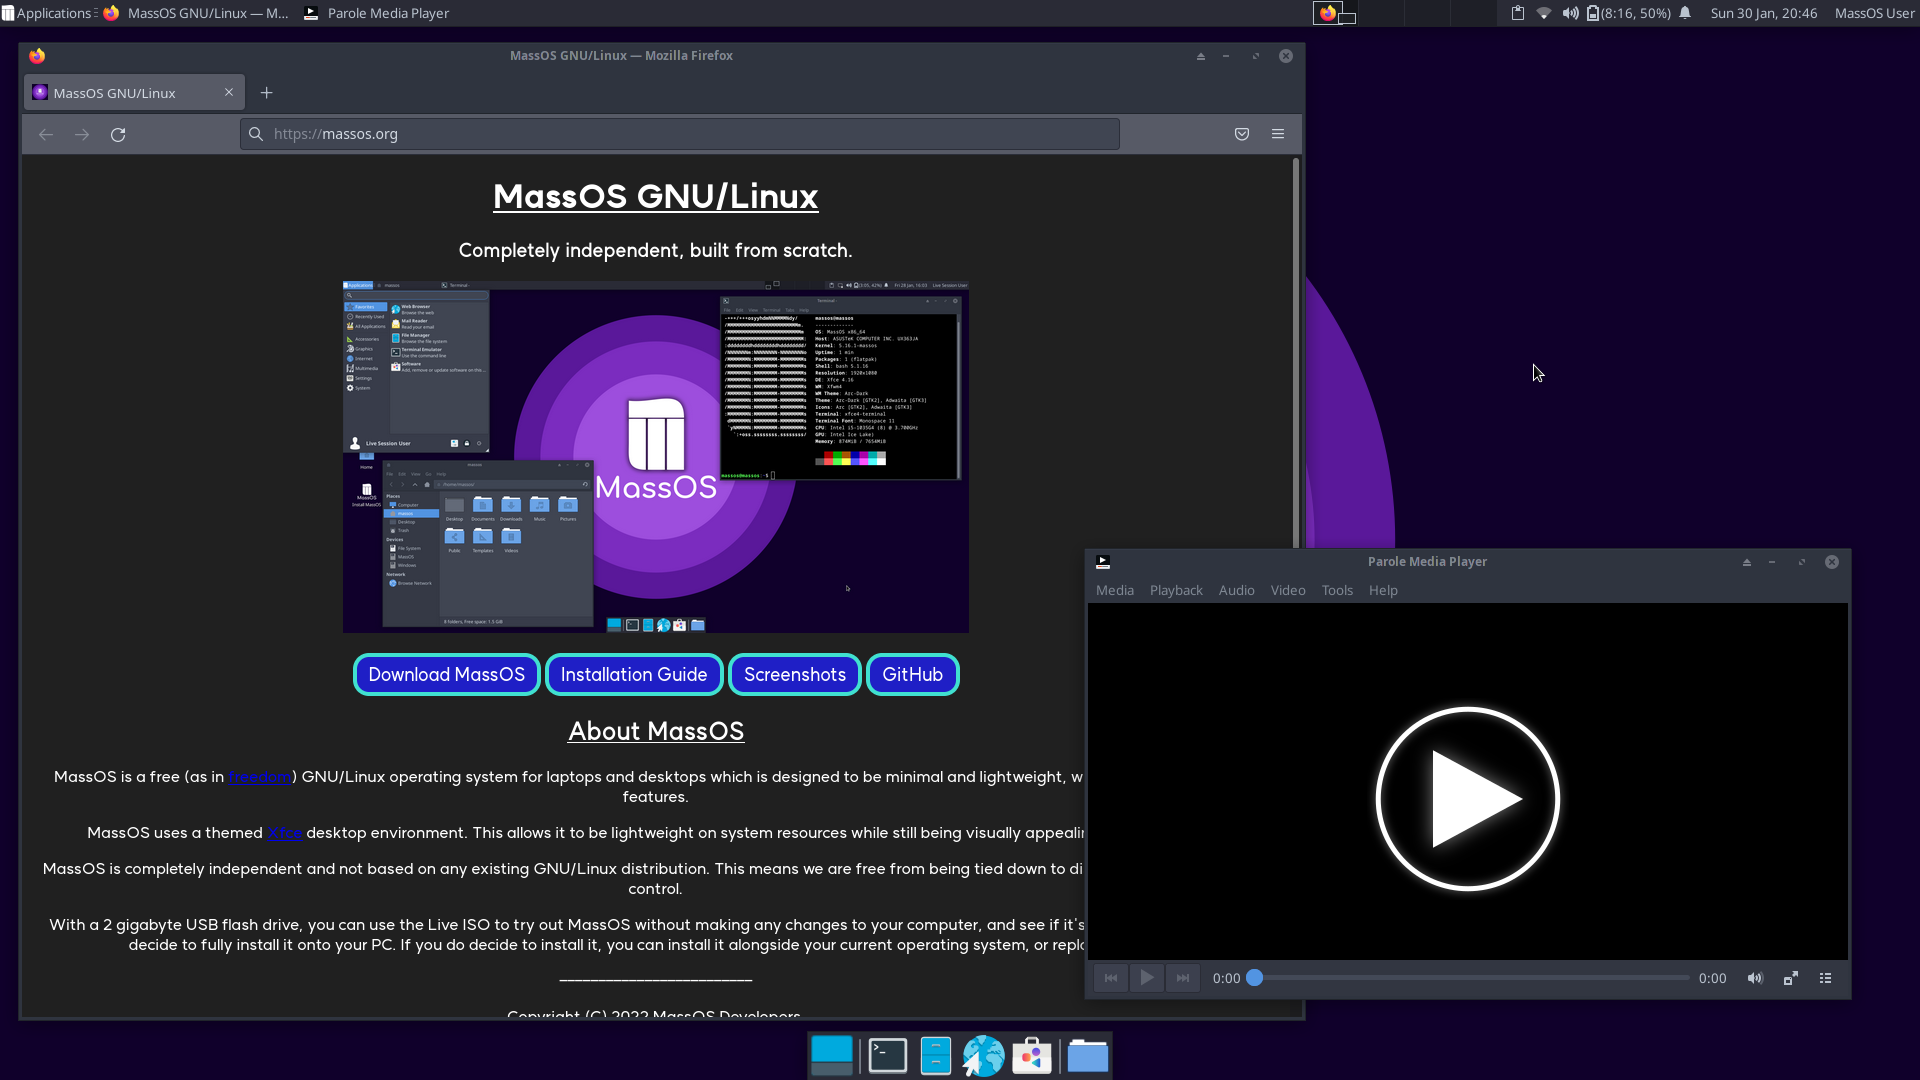 Screenshot of Mozilla Firefox and Parole Media Player on MassOS.